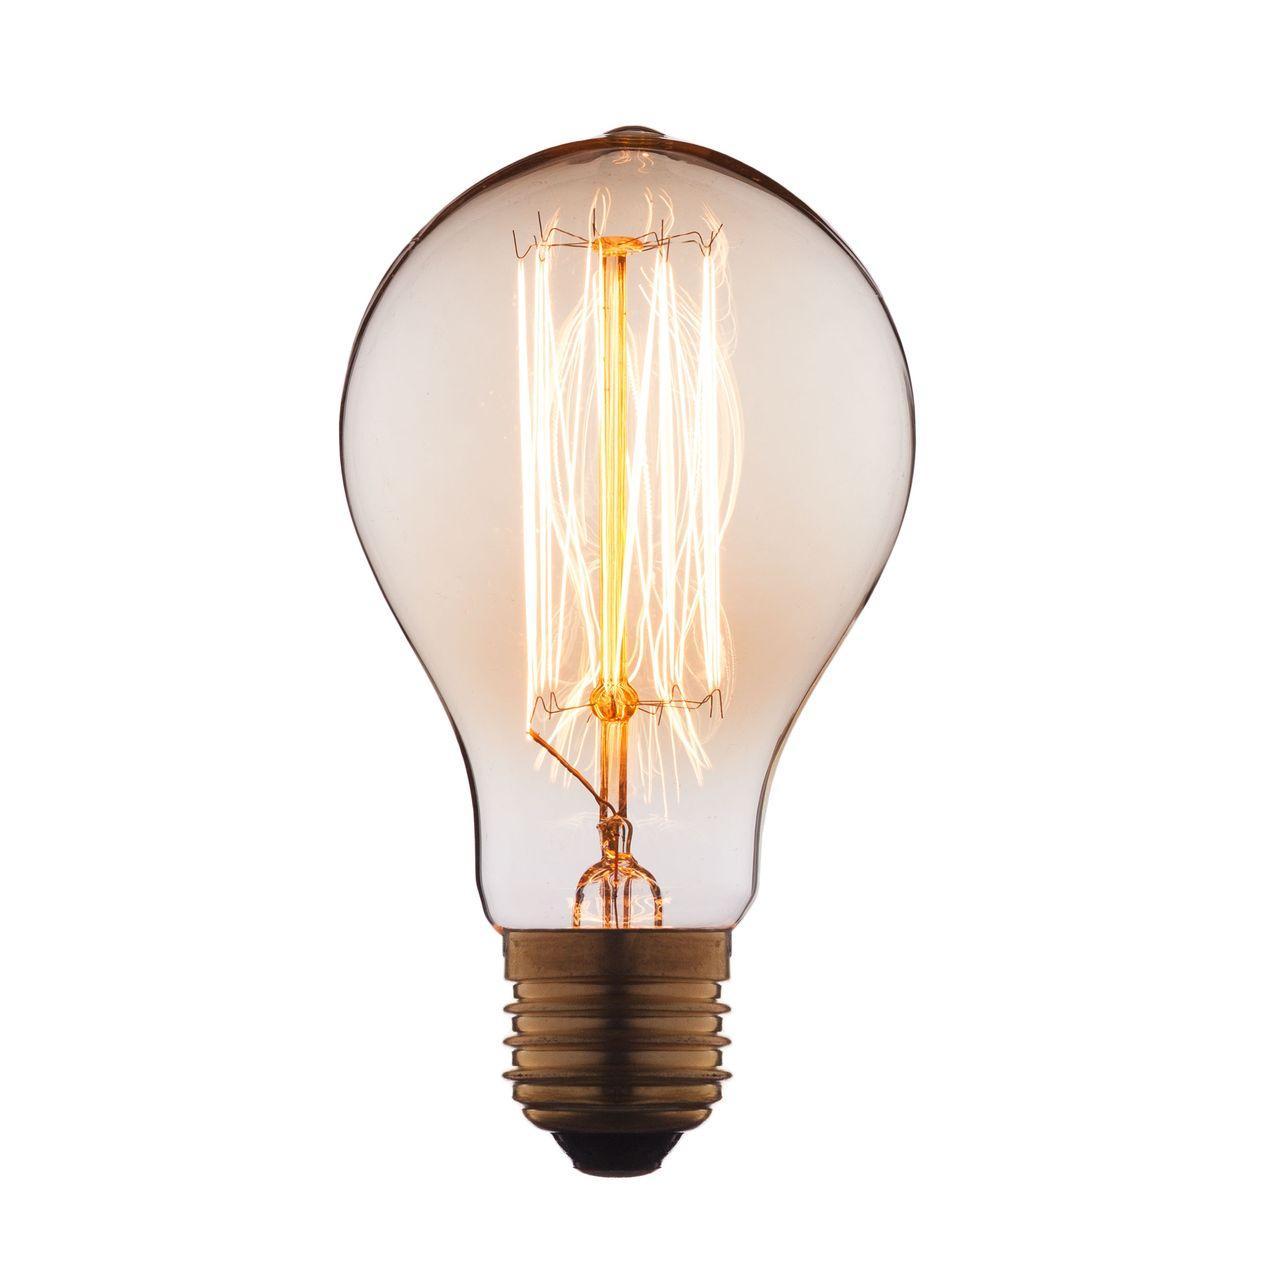 Лампа накаливания E27 40W груша прозрачная 7540-SC